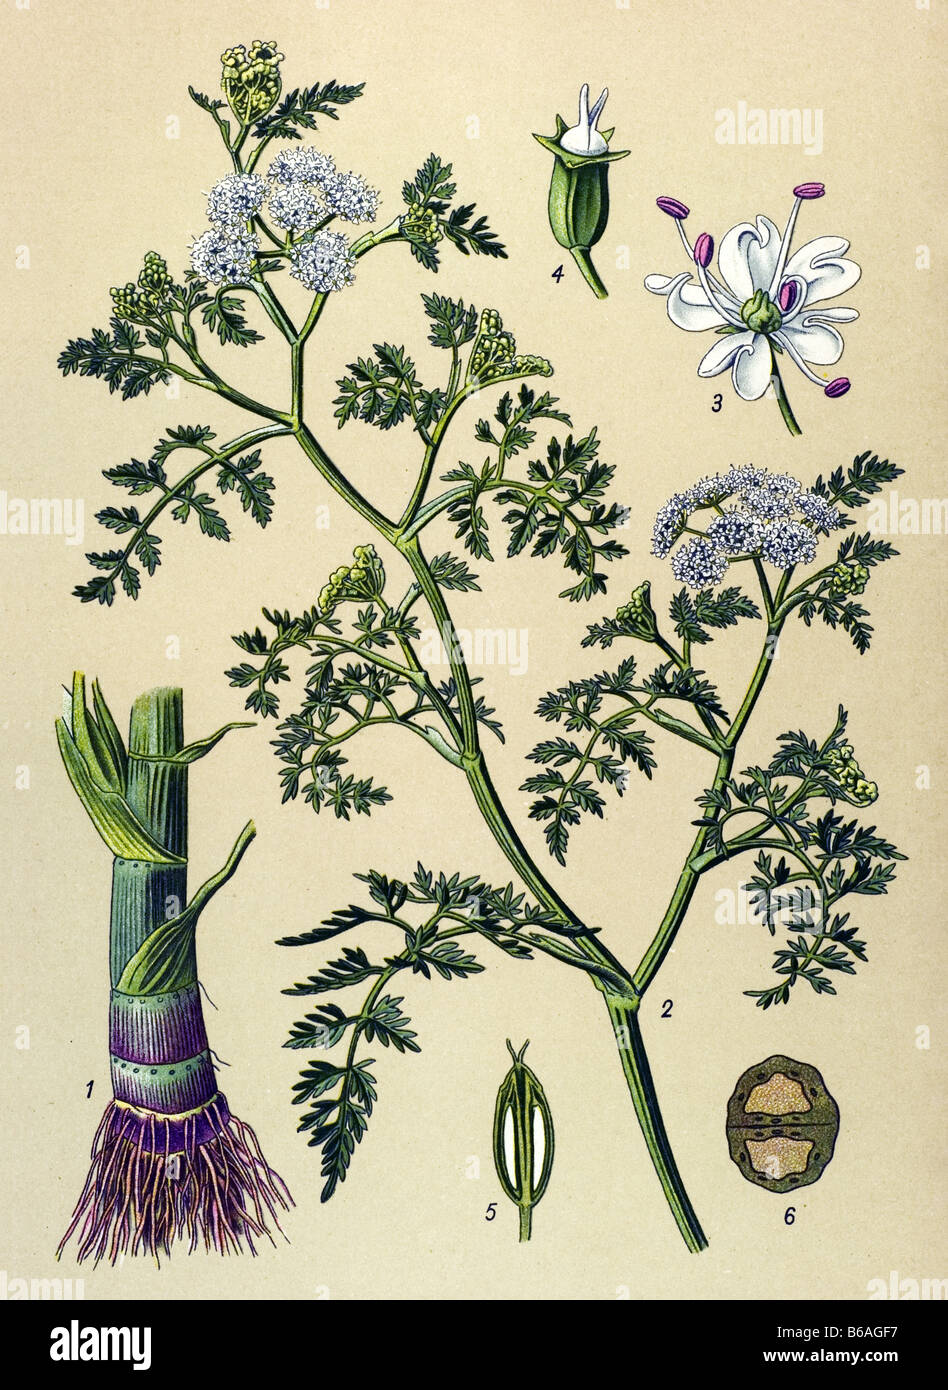 Oenanthe aquatica poisonous plants illustrations Stock Photo